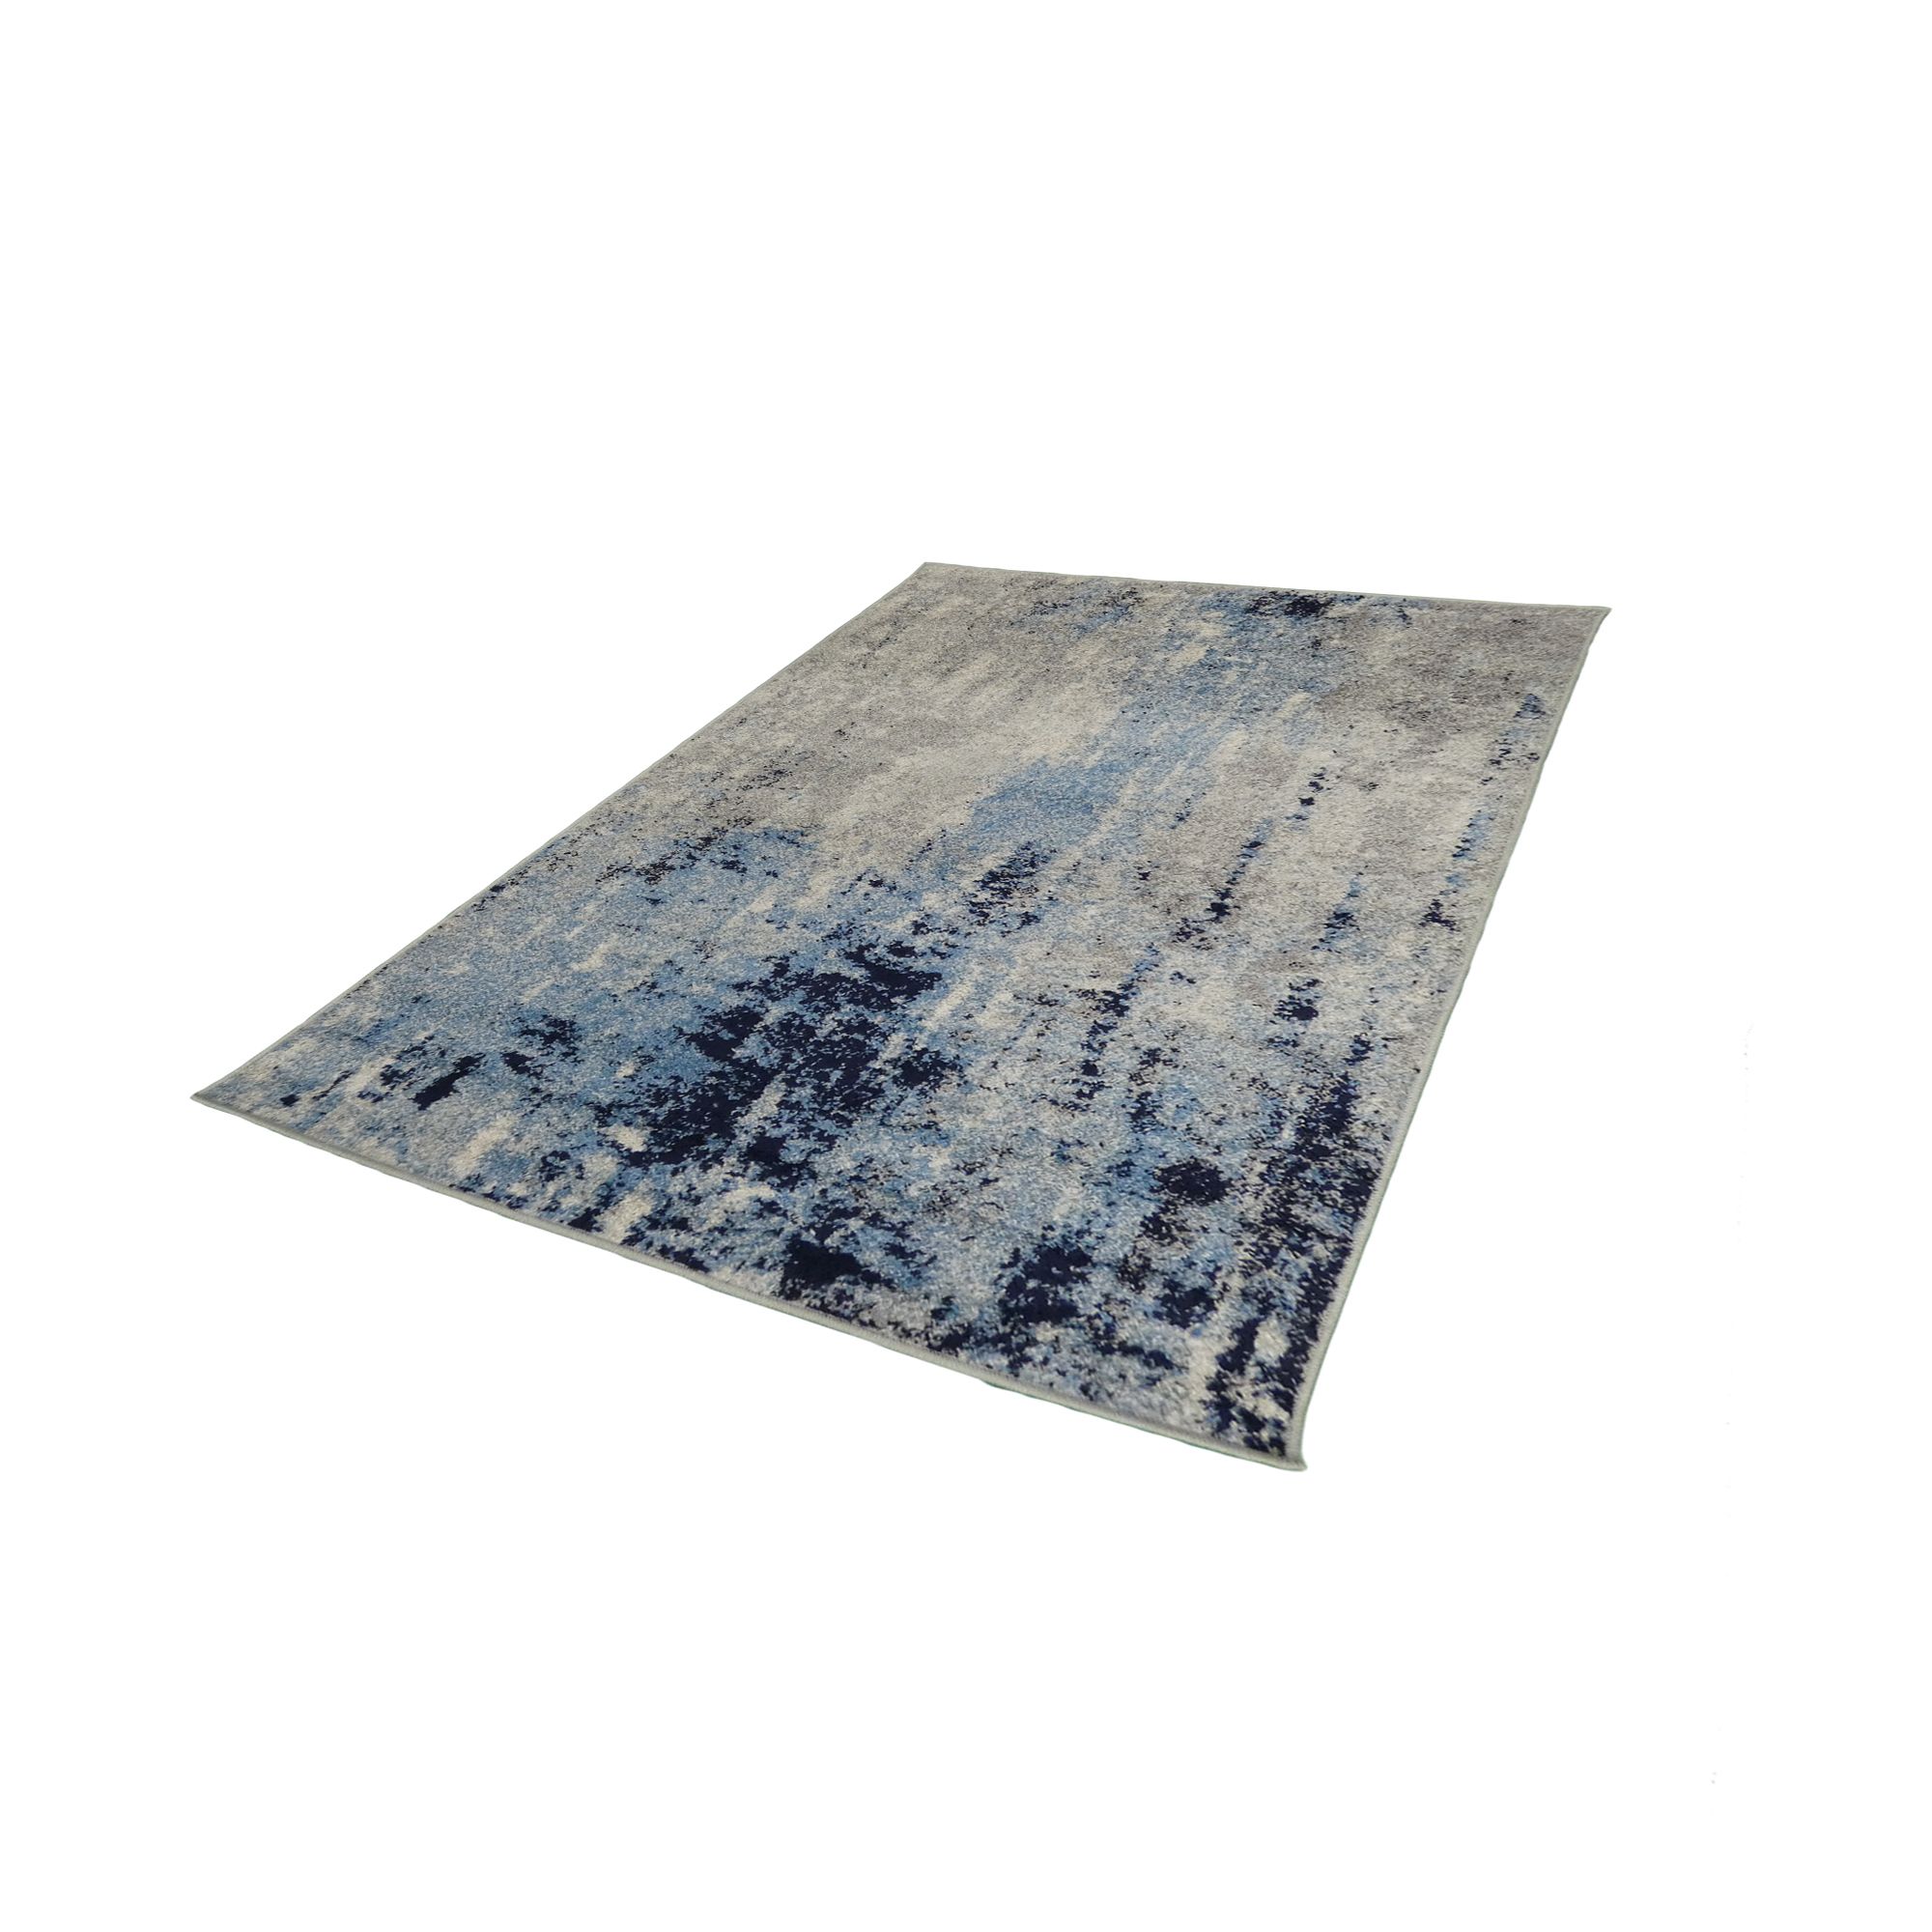 Gilbert Blue & Grey Abstract Rug 230cmx160cm